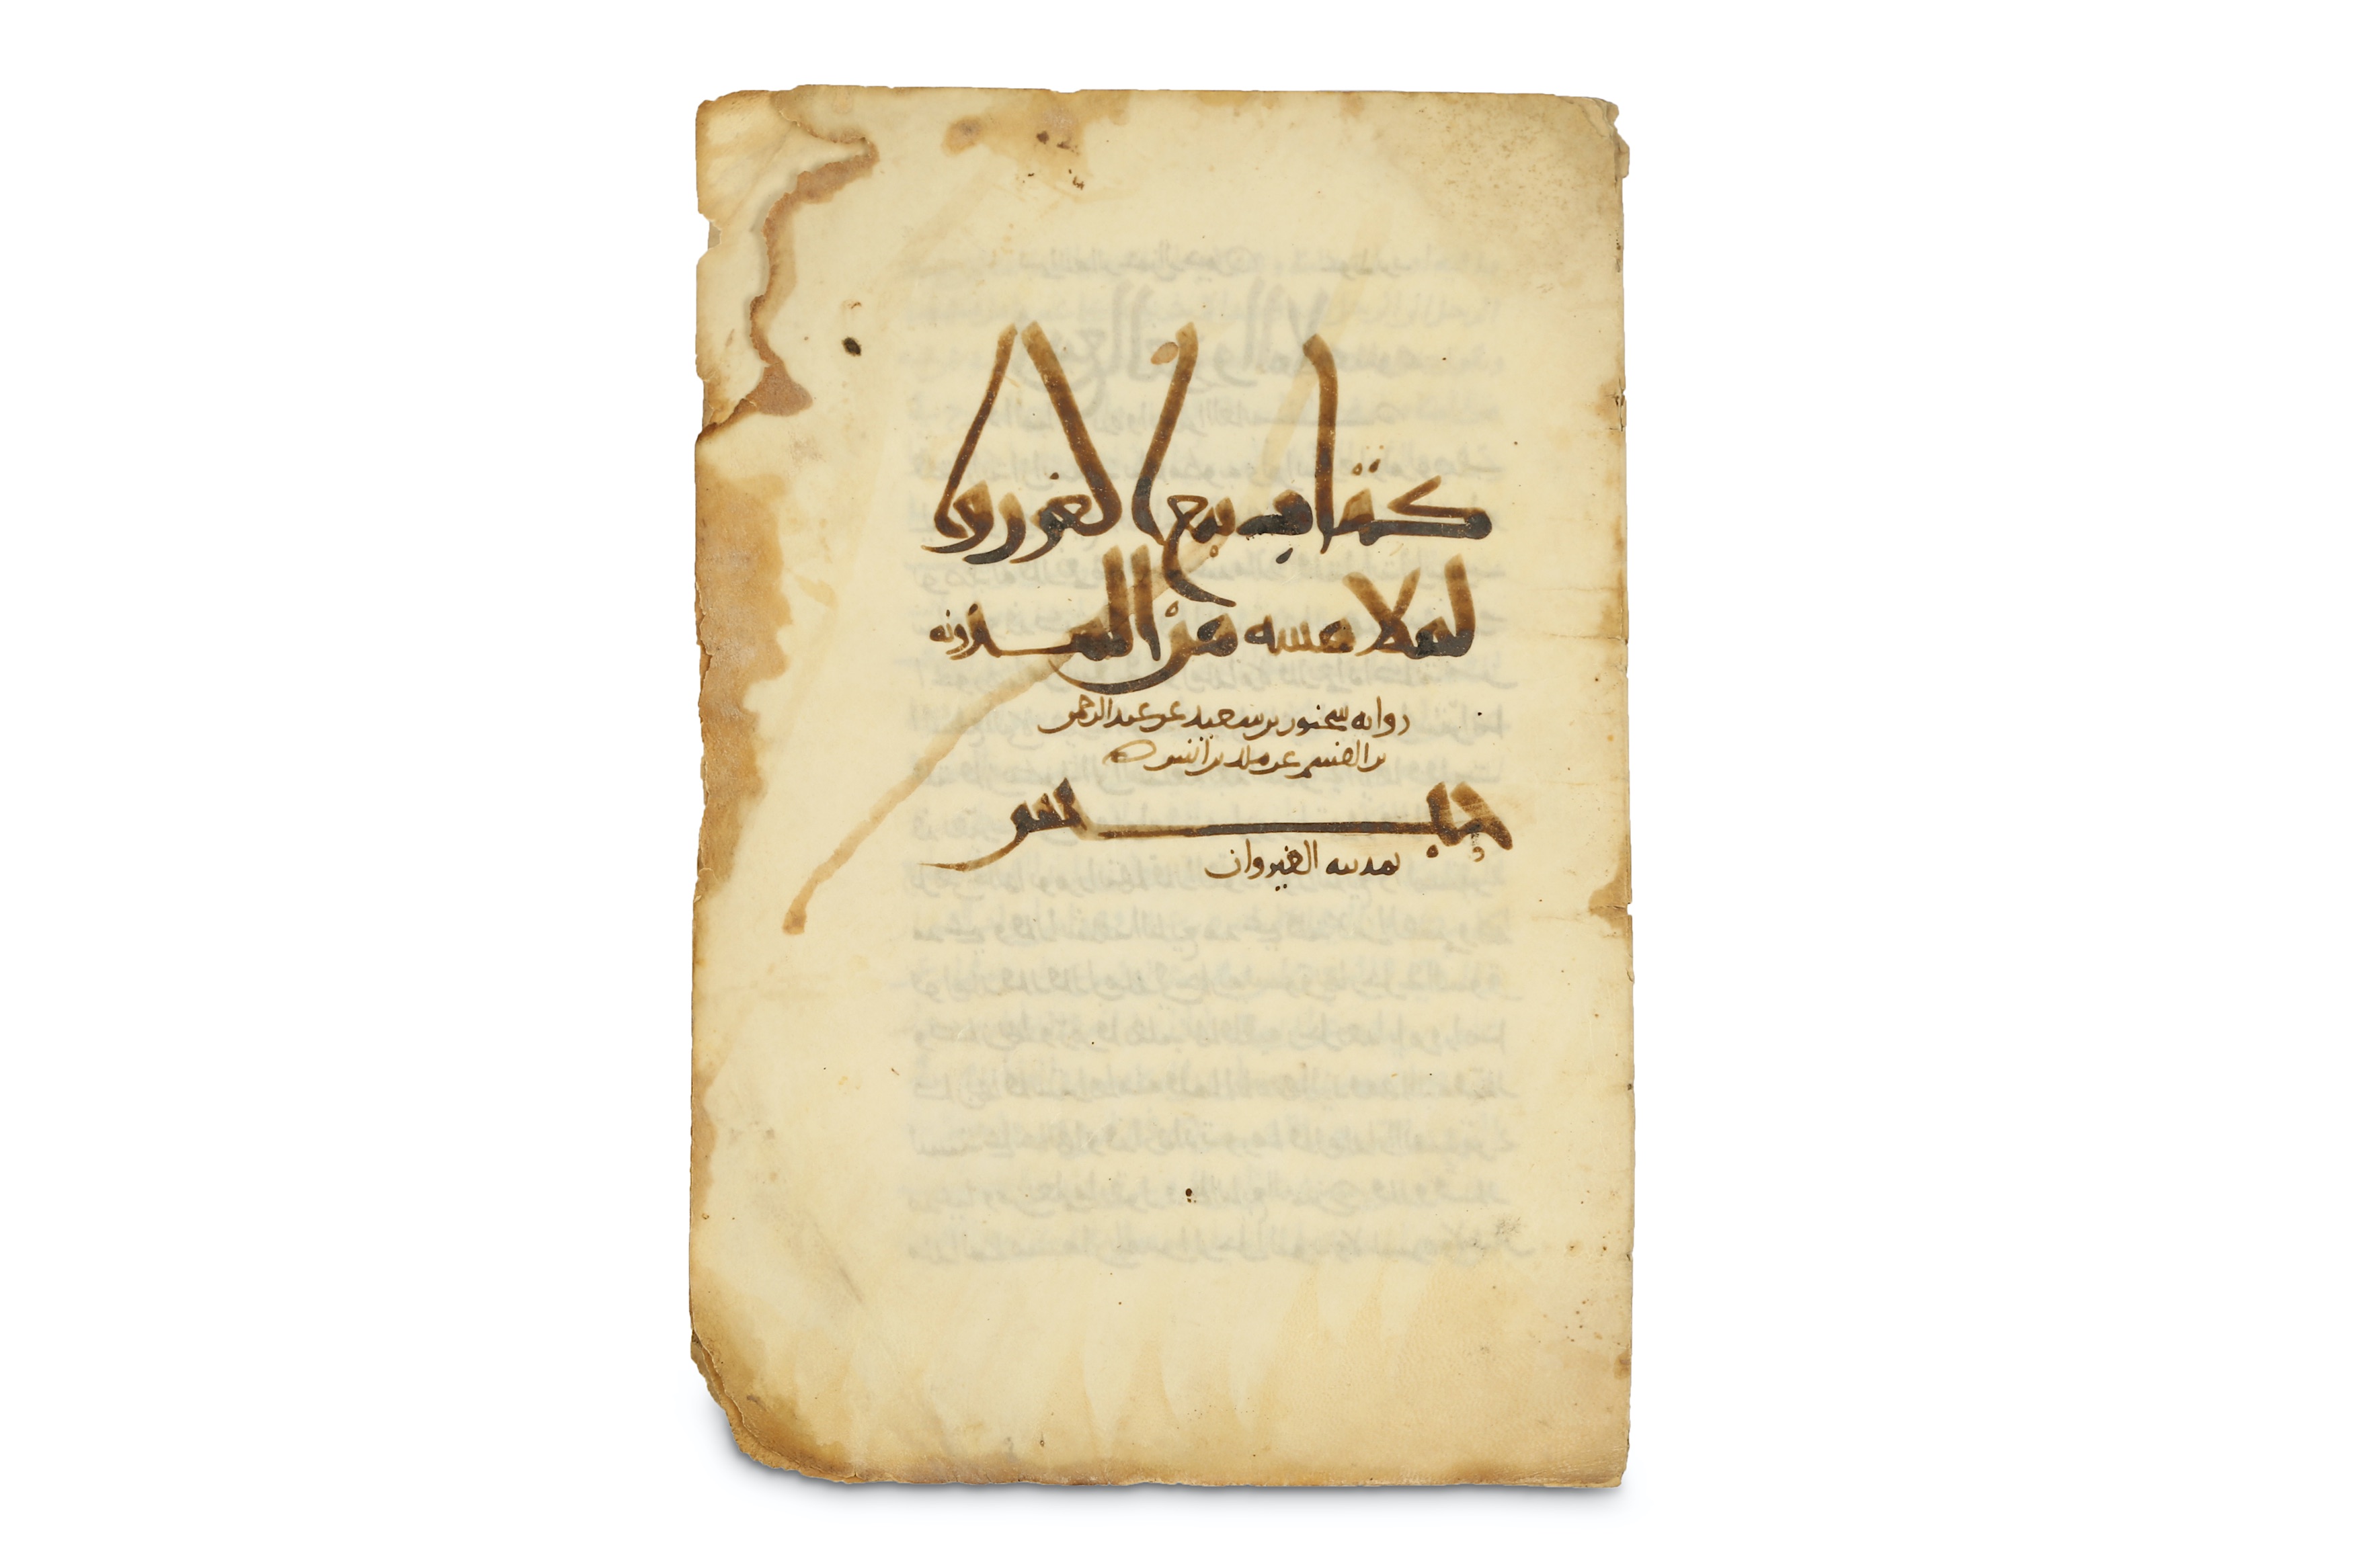 FOUR FOLIOS OF KITAB BAYA' AL-GHURAR WAS AL-MULAMASSAH BY IMAM MALIK IBN ANAS (d. 795 AD)